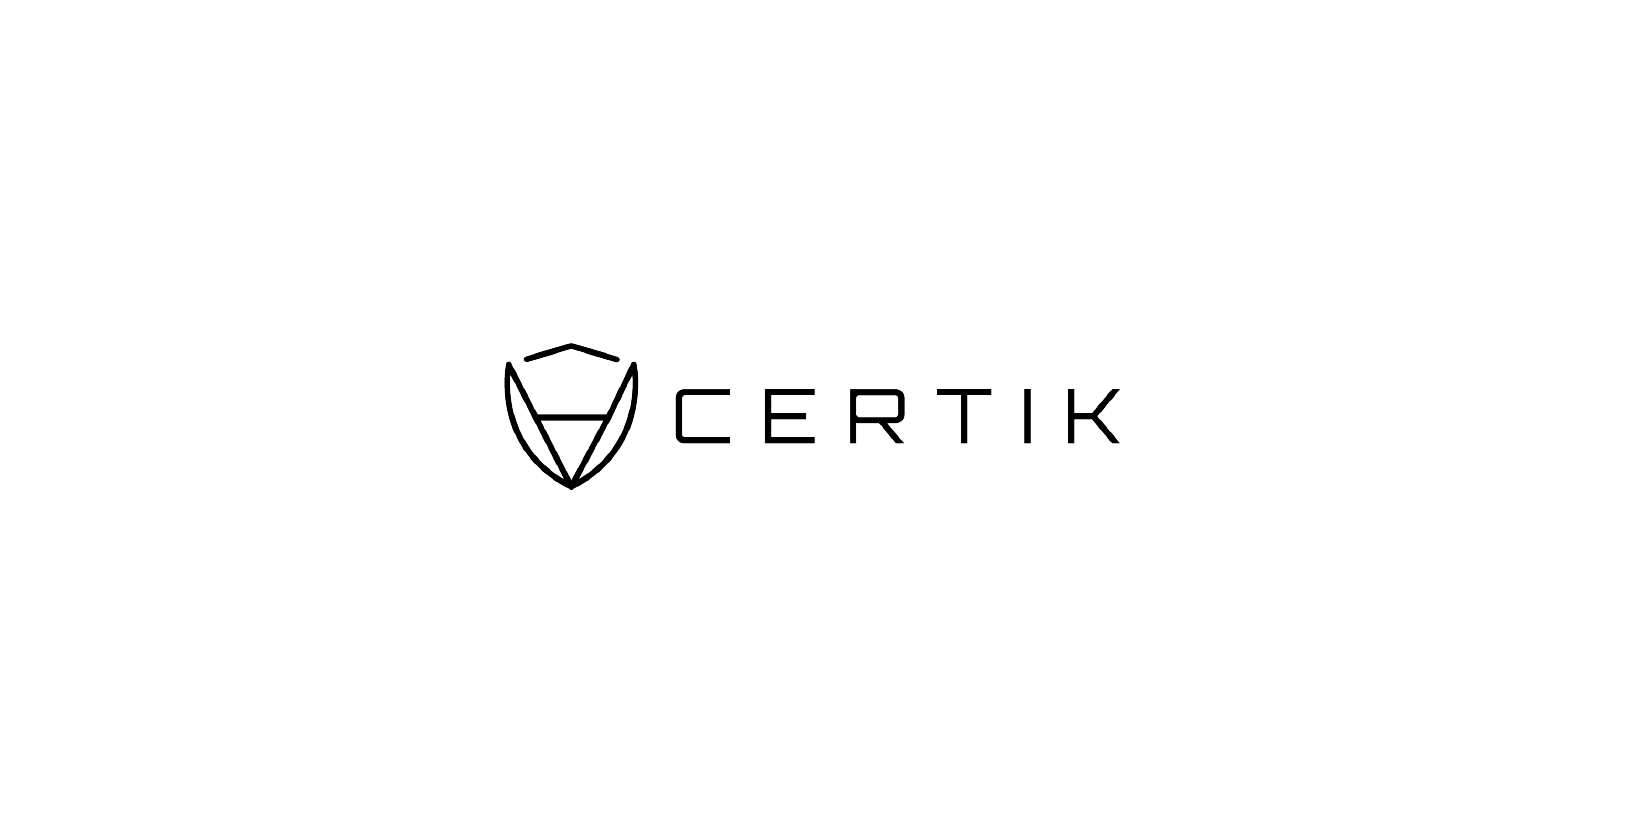 Vision Fund investment portfolio company CertiK's logo